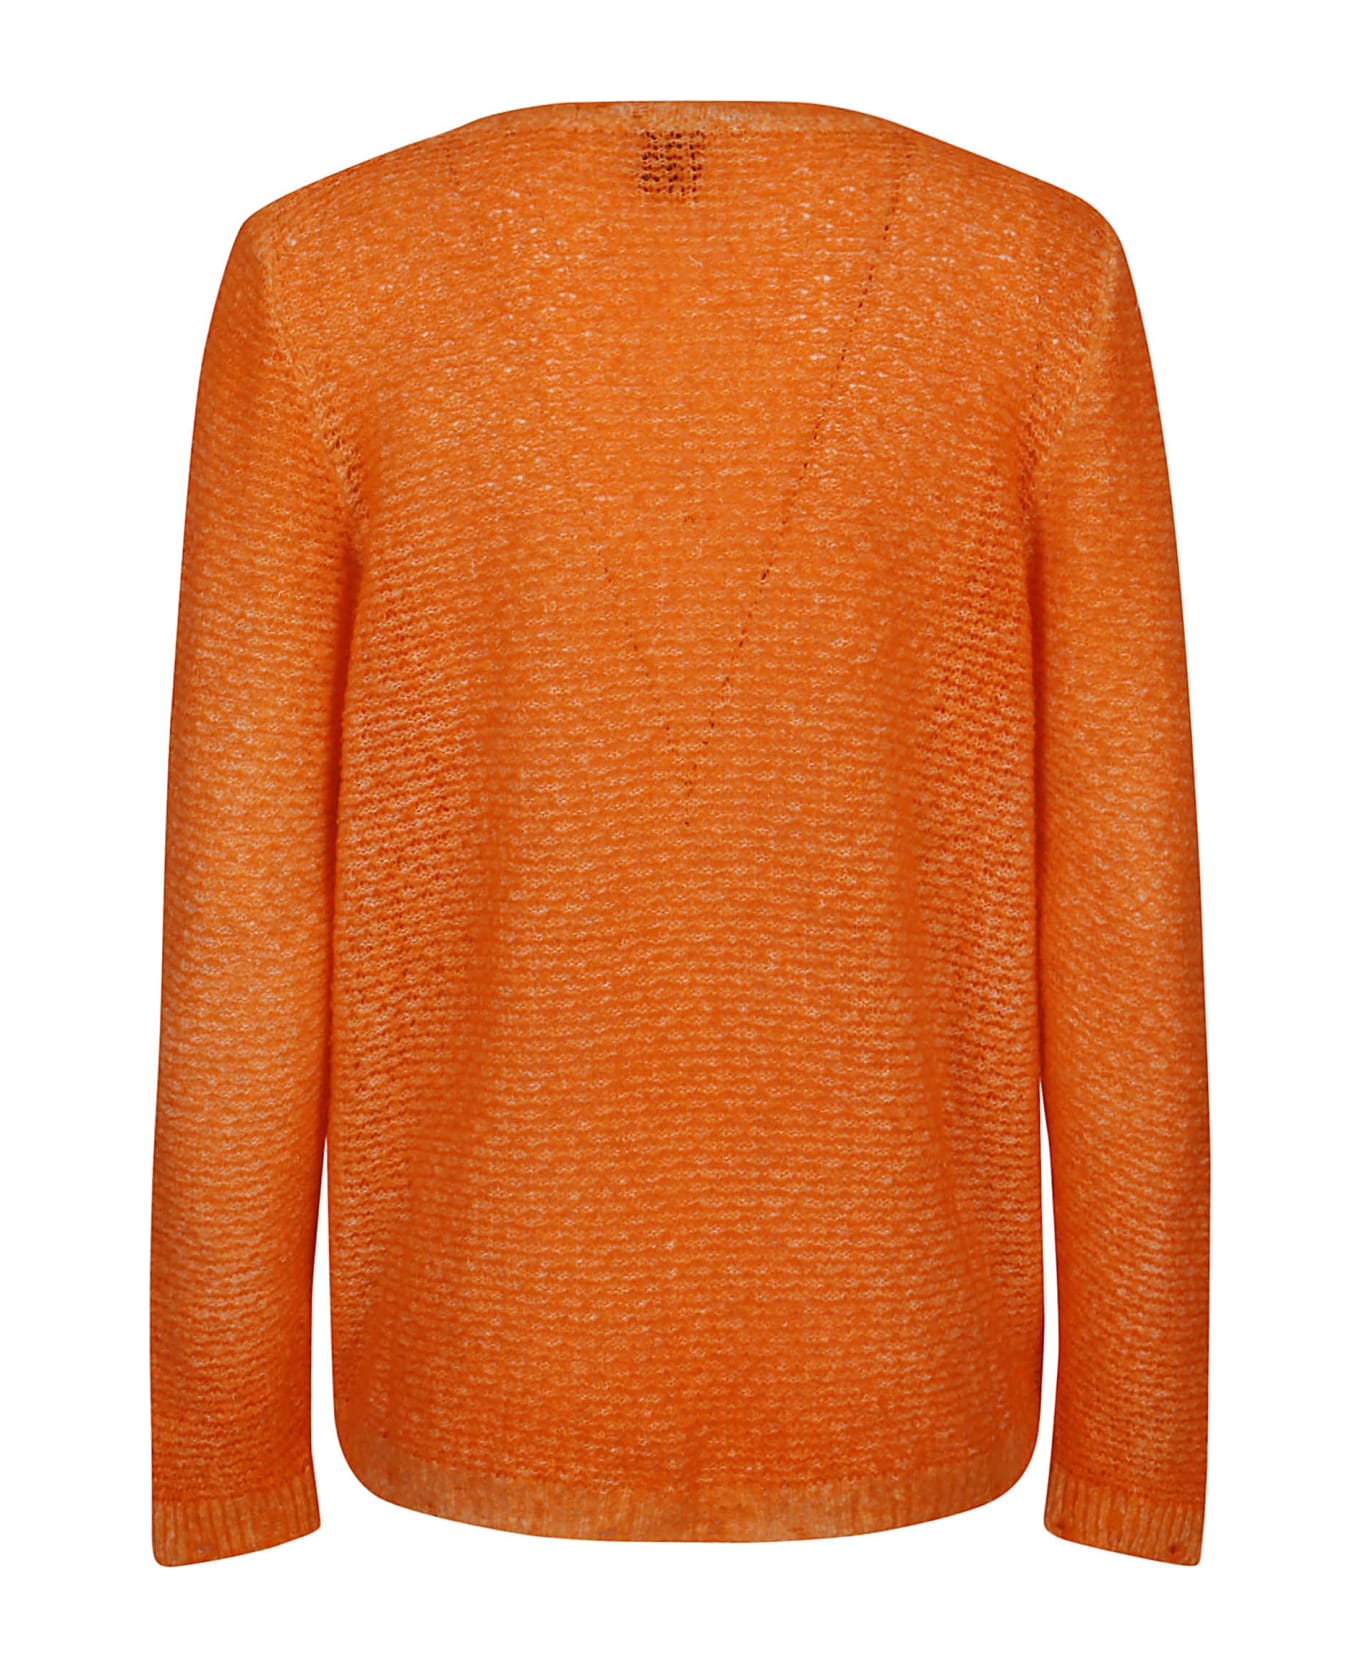 Avant Toi Sweaters Orange - Orange